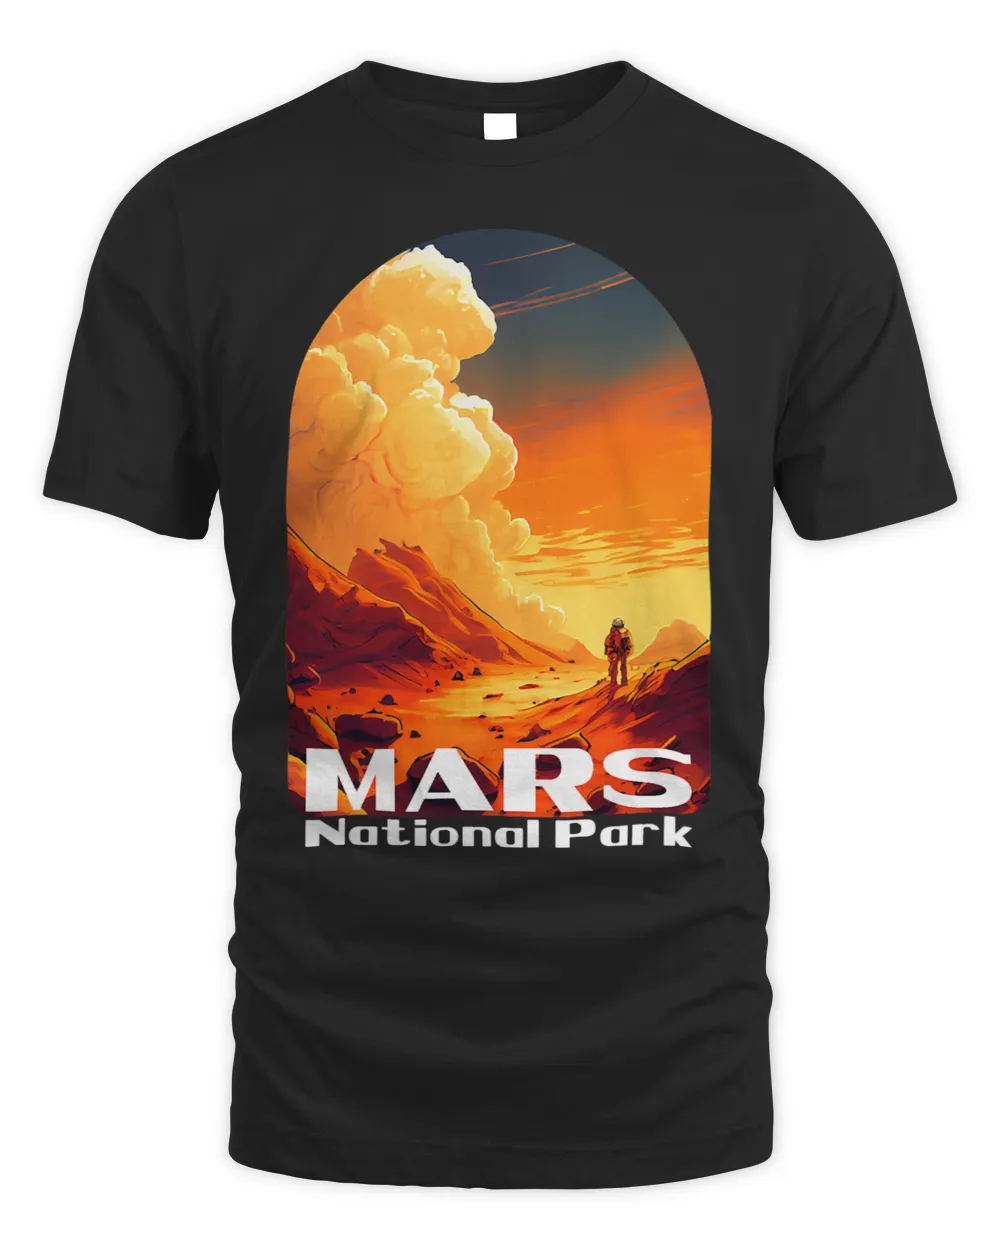 Astronauts Mars National Park Vintage Sci Fi Poster Space Astronaut